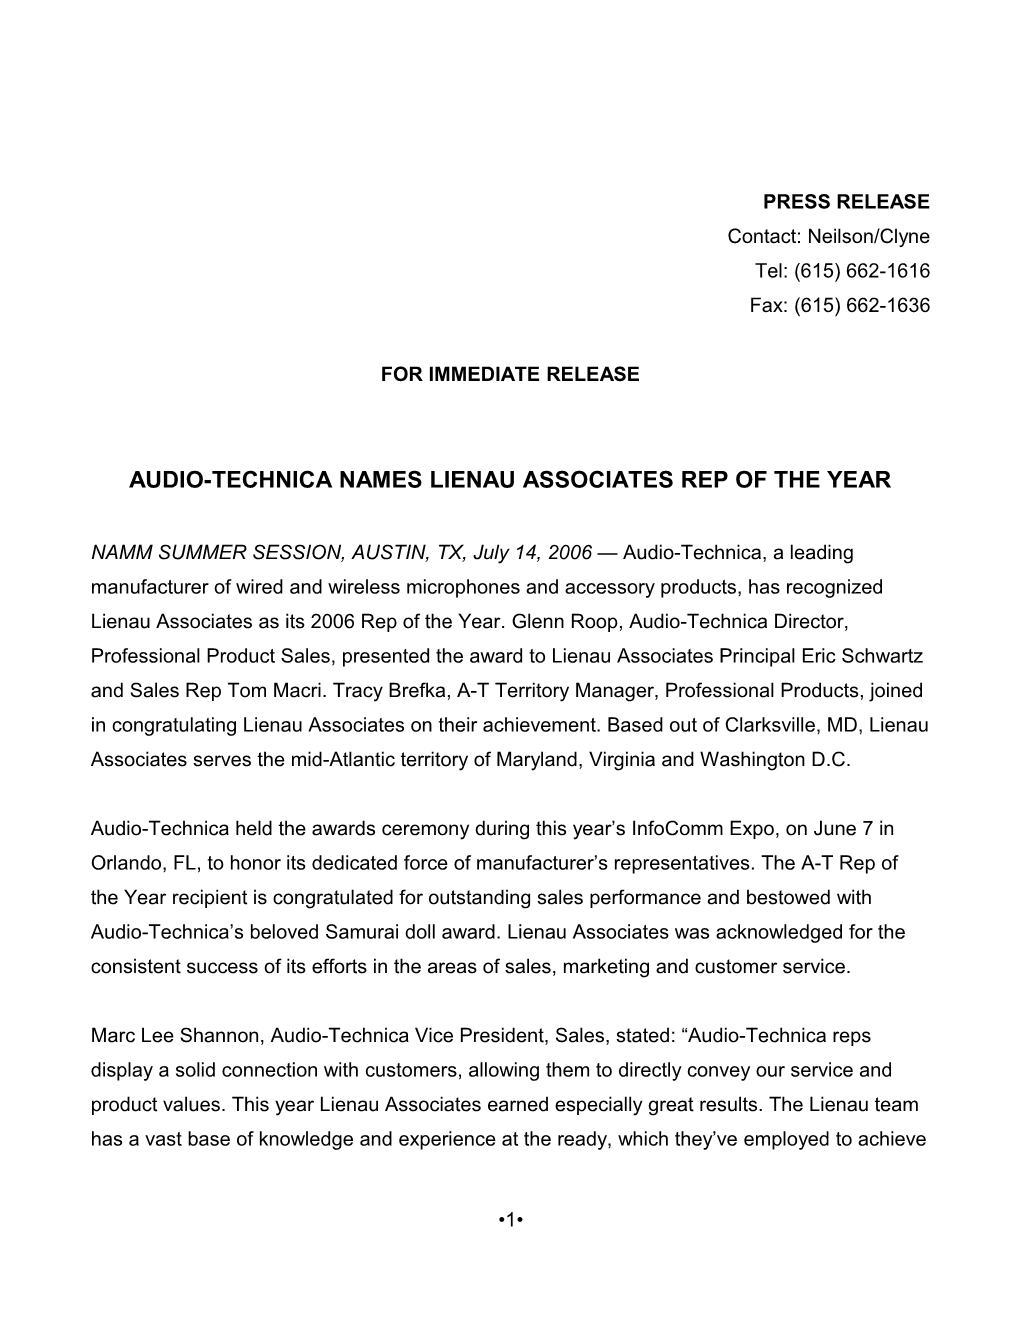 Audio-Technica Names Lienau Associates Rep of the Year